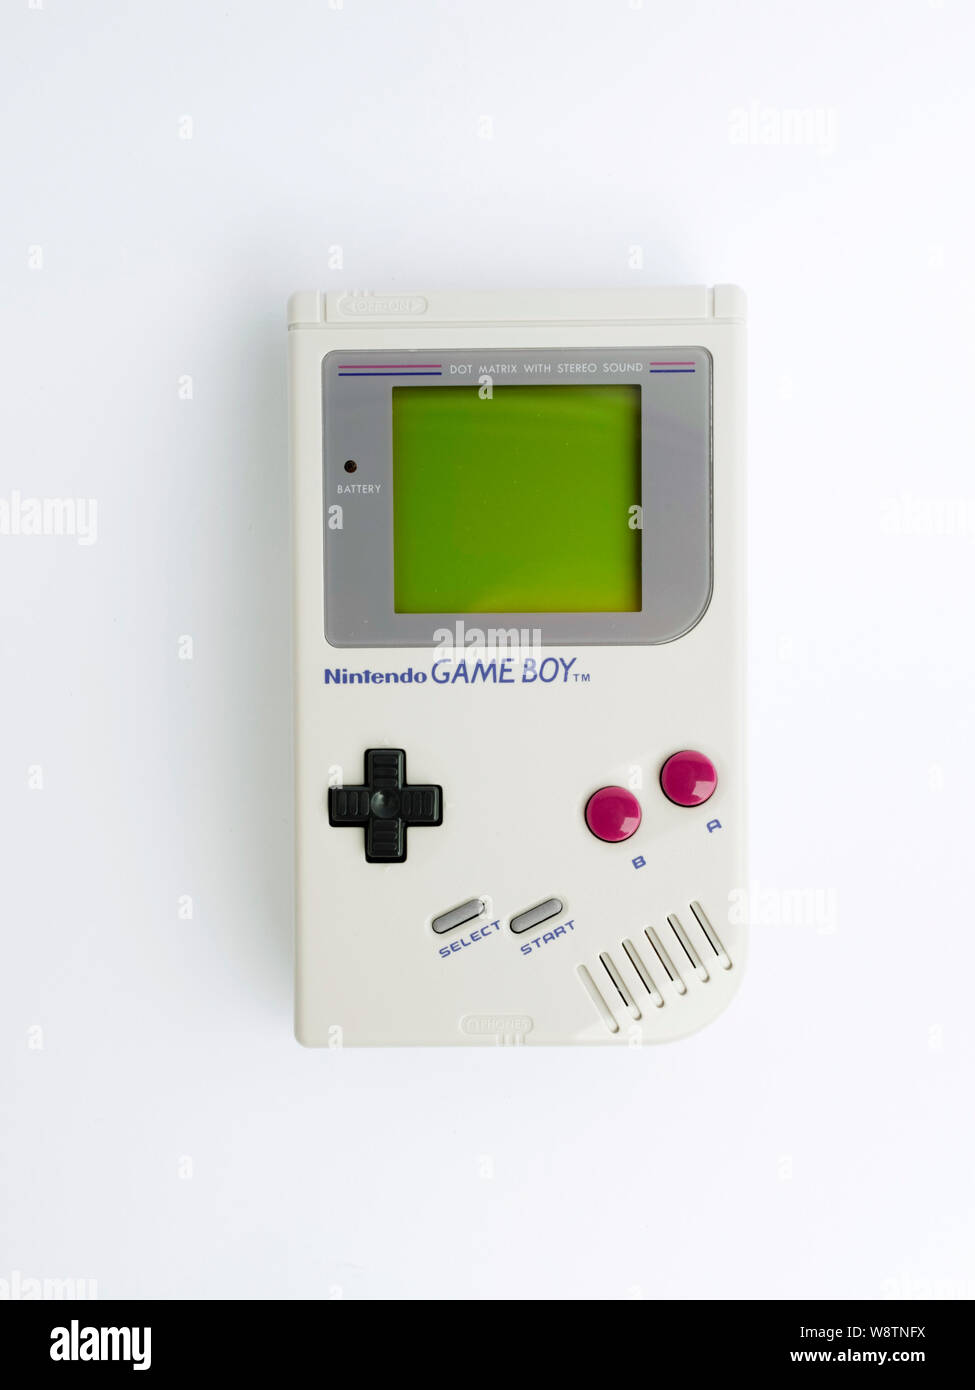 Jeu Game Boy Color et Advance Blanche-Neige - Gameboy